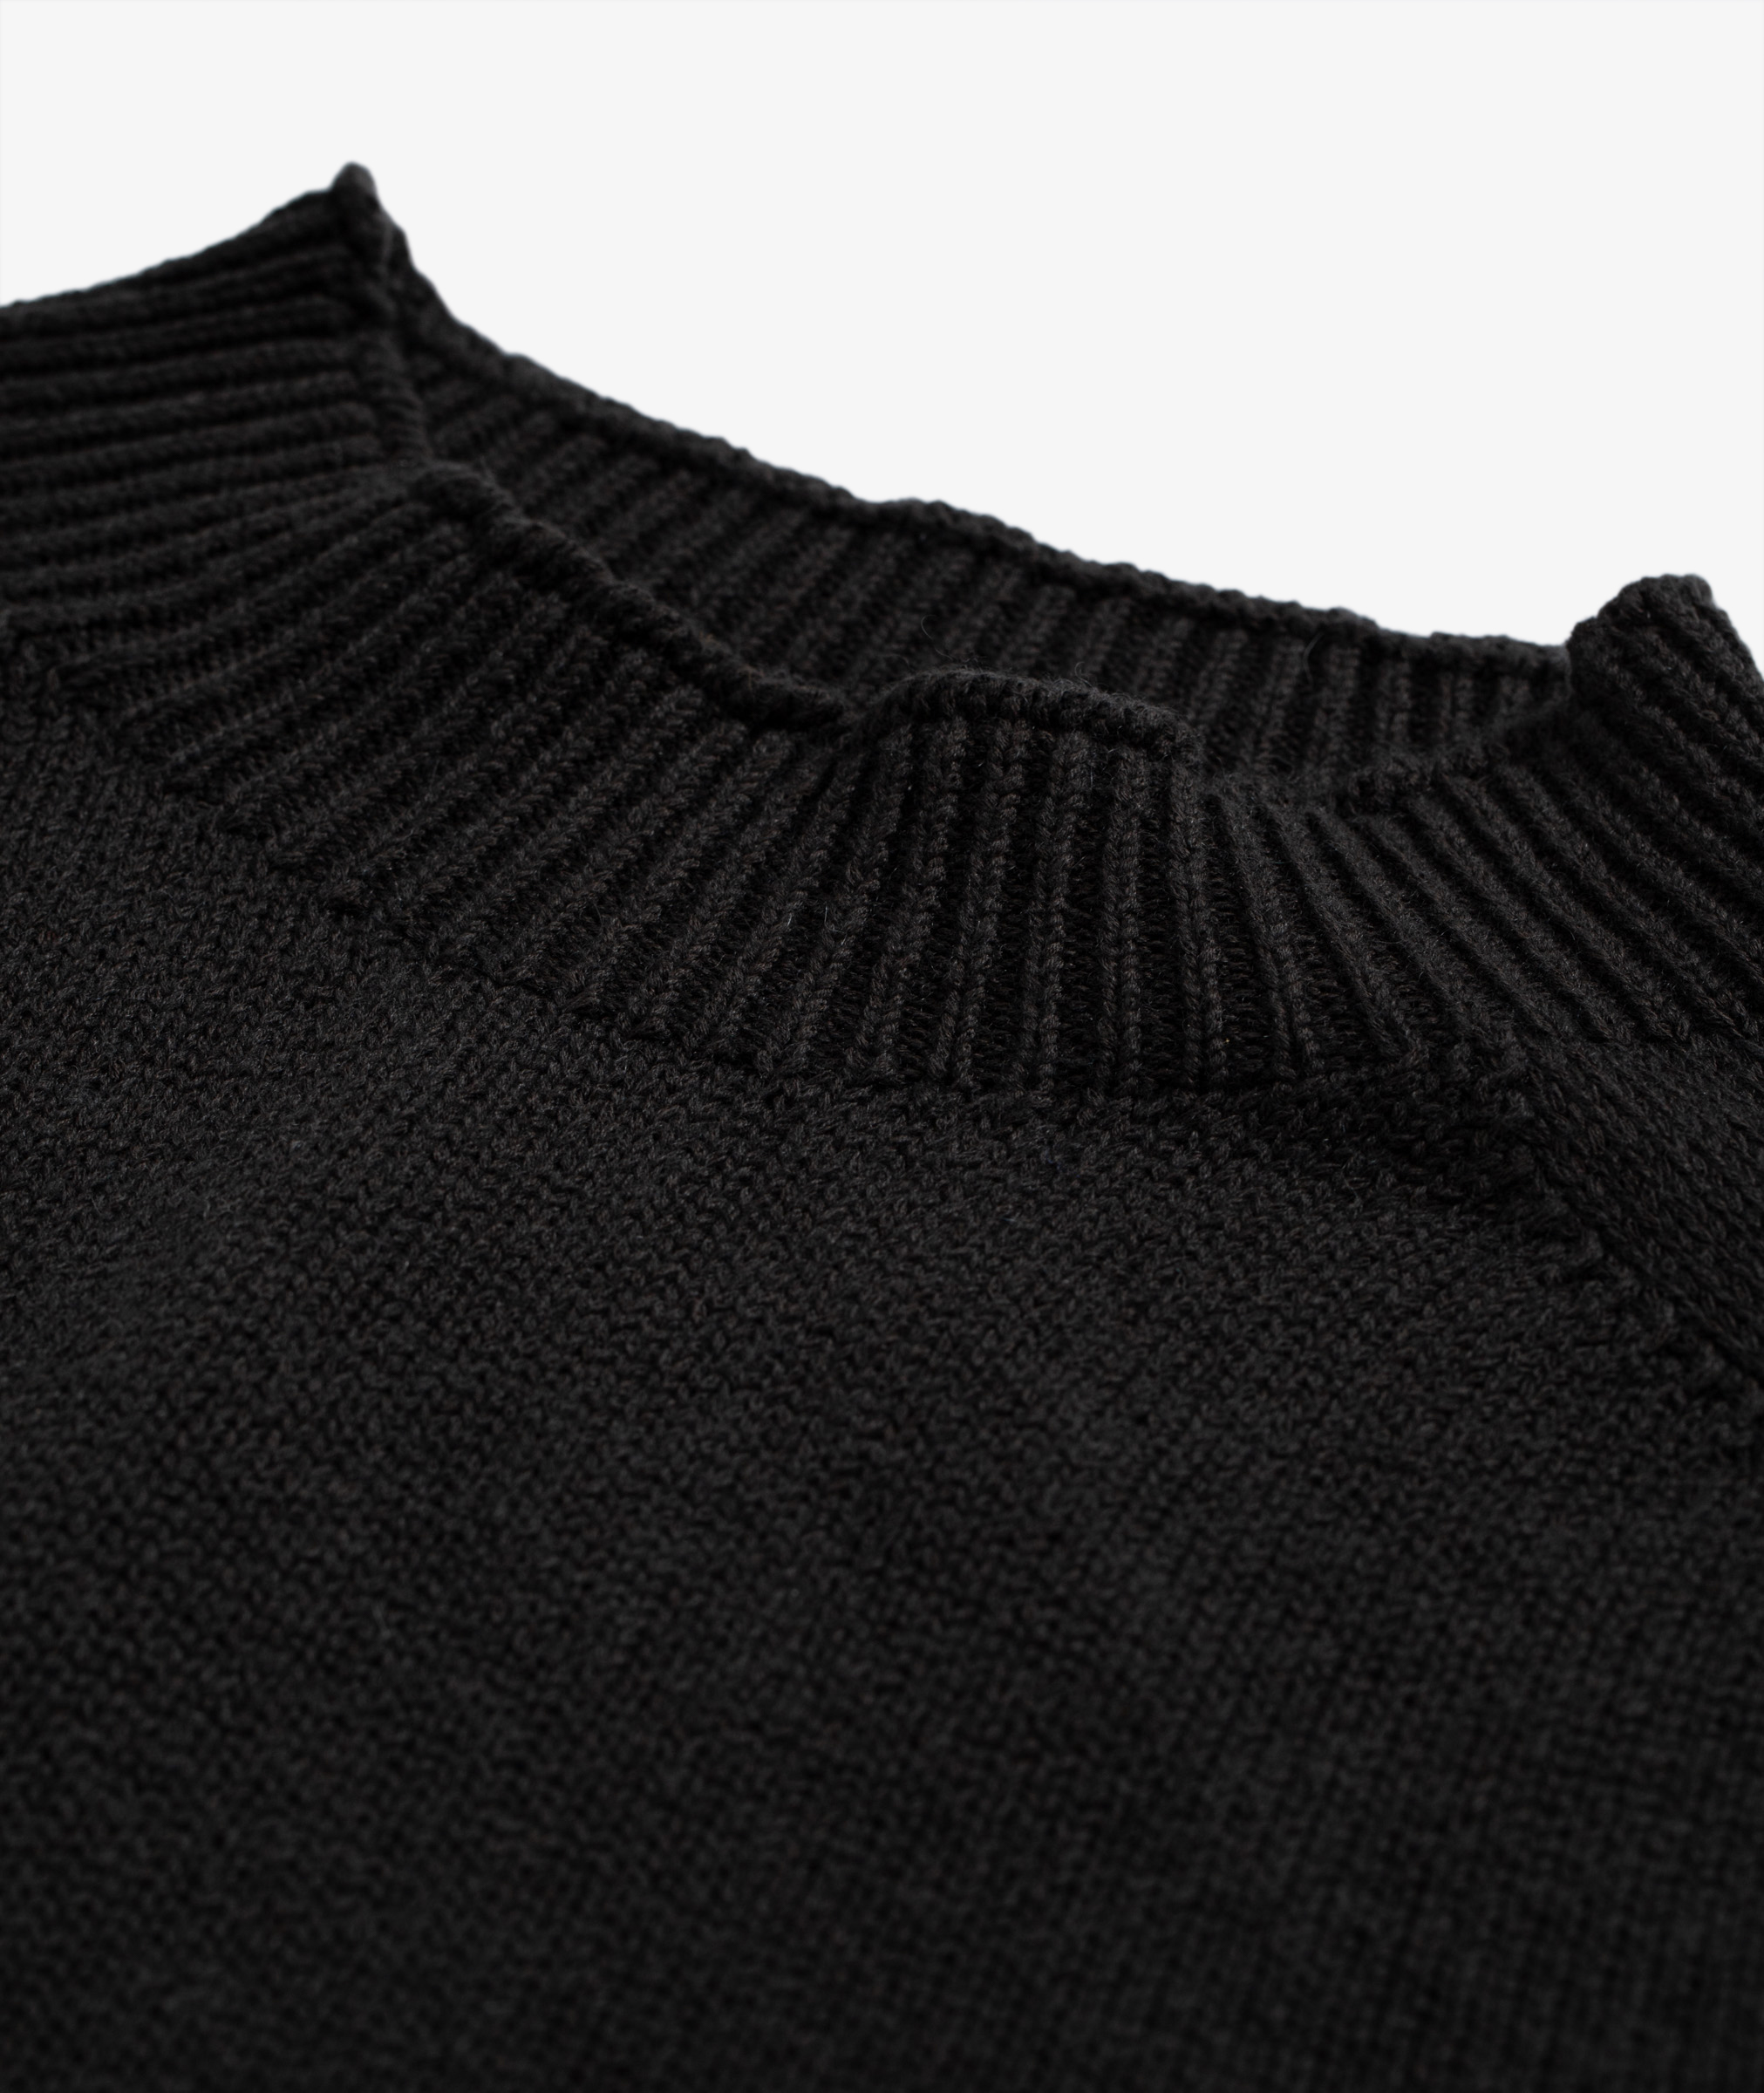 Women's Black marguerite Sweatshirt in Organic Cotton -  Canada